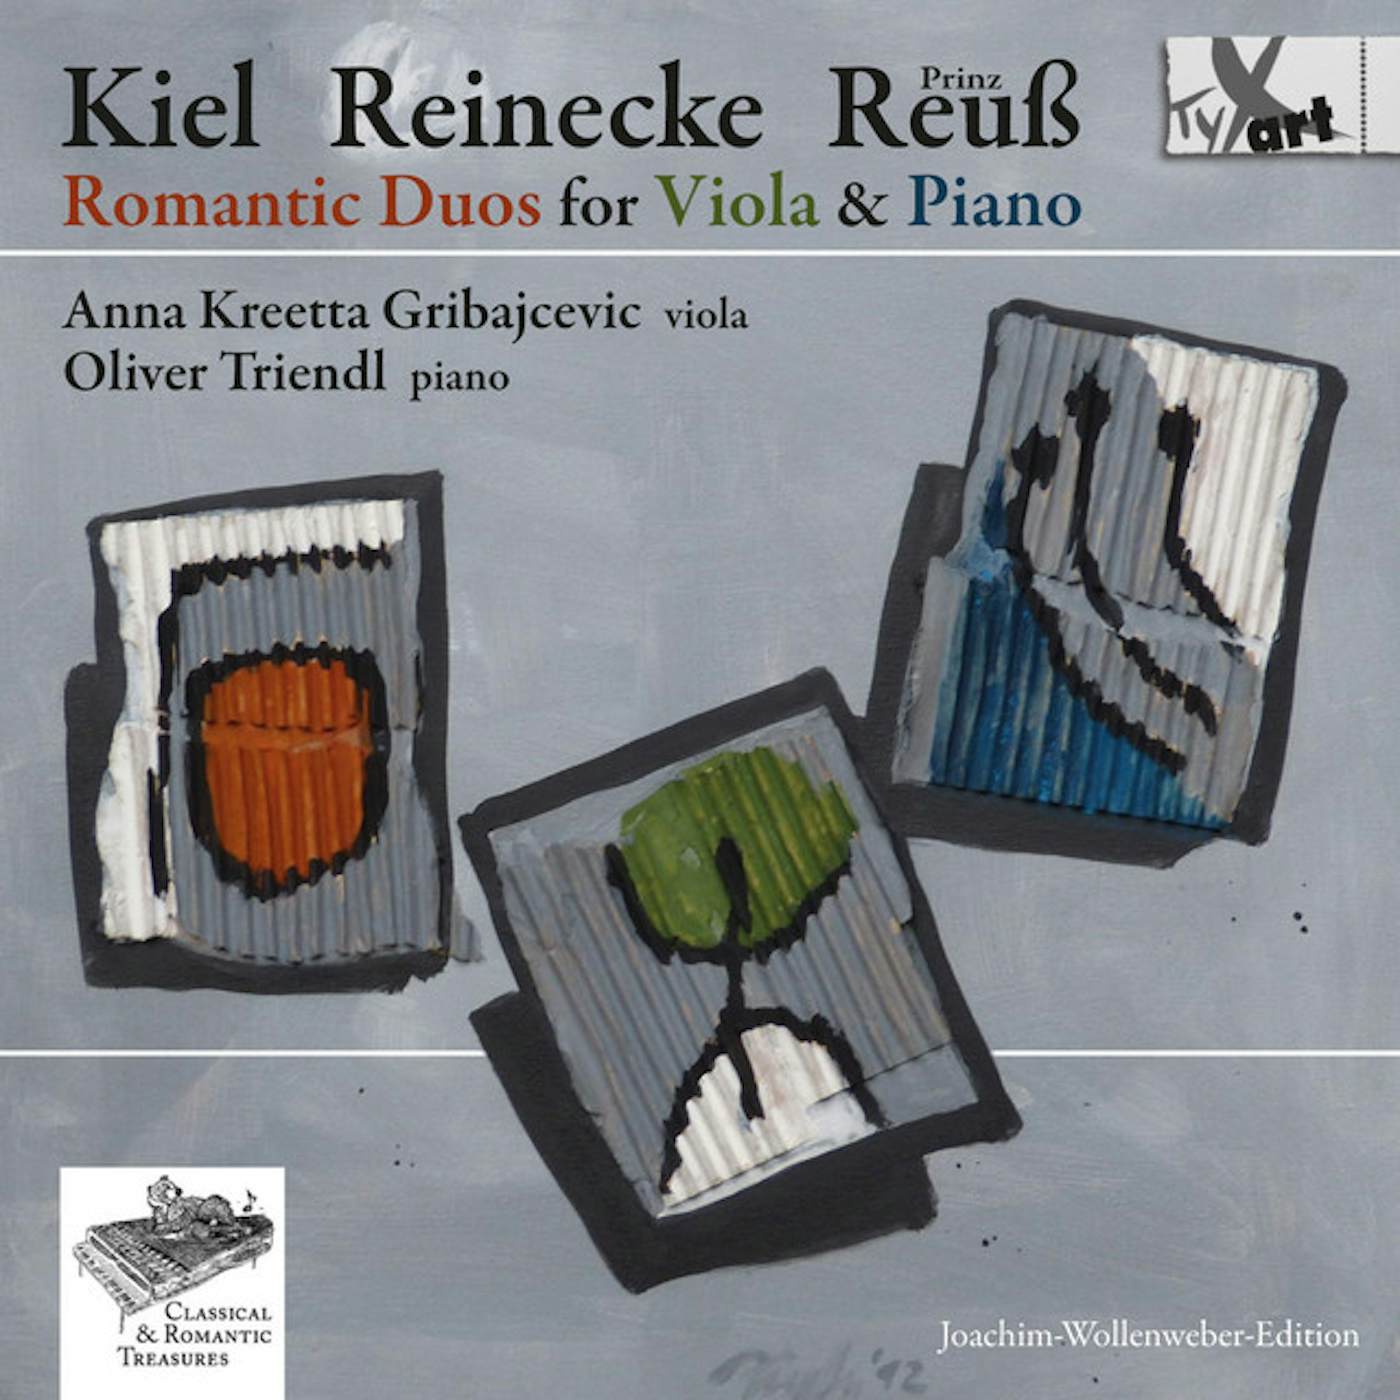 Classical Treasures ROMANTIC PIANO CD